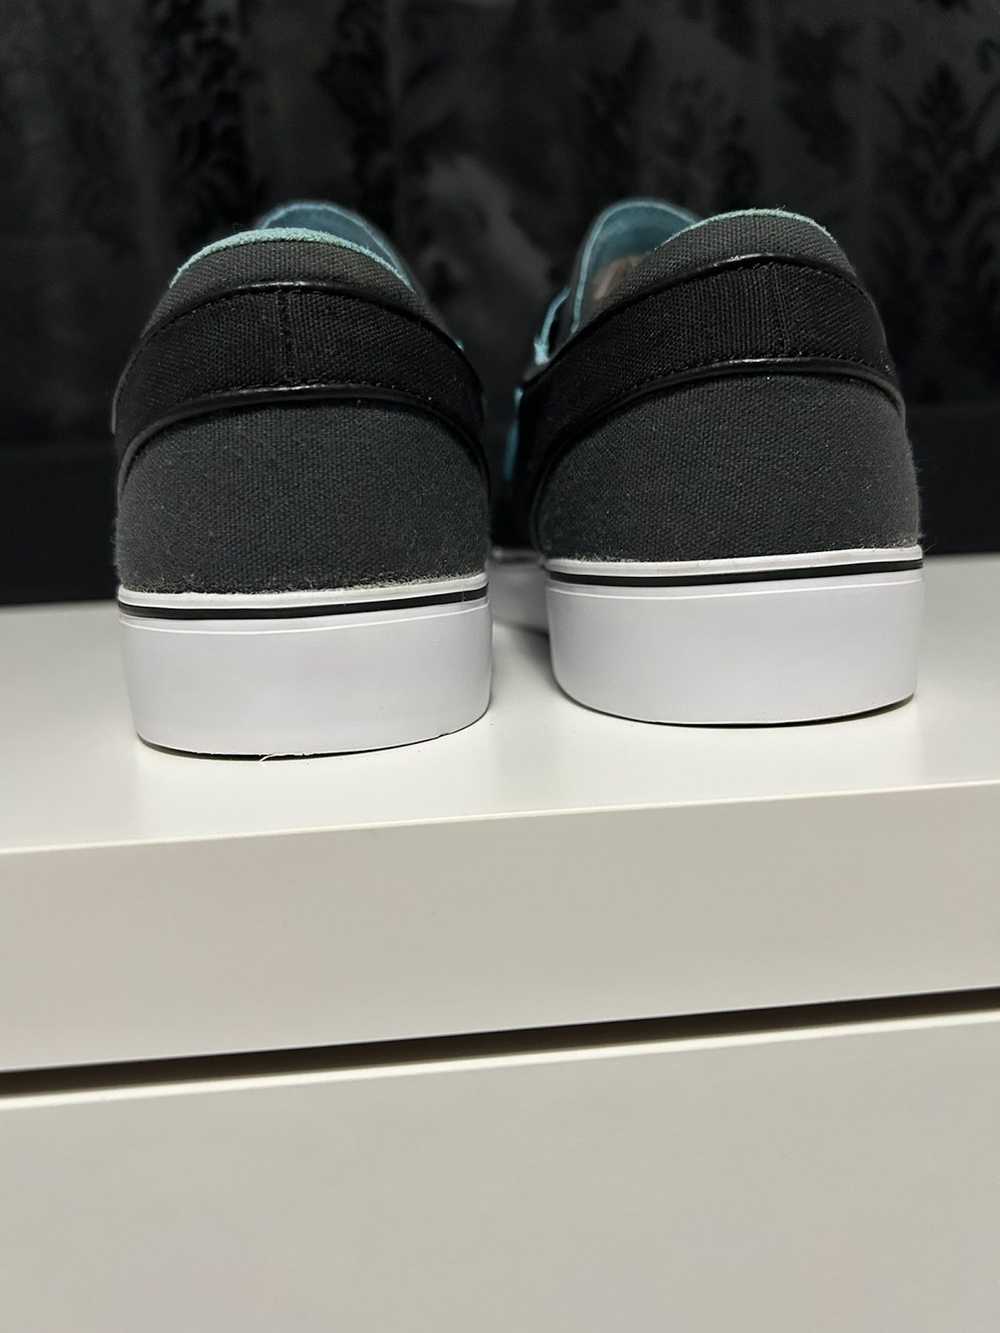 Nike Stefan Janoski Black/Hyper Blue - Size: 10.5 - image 7